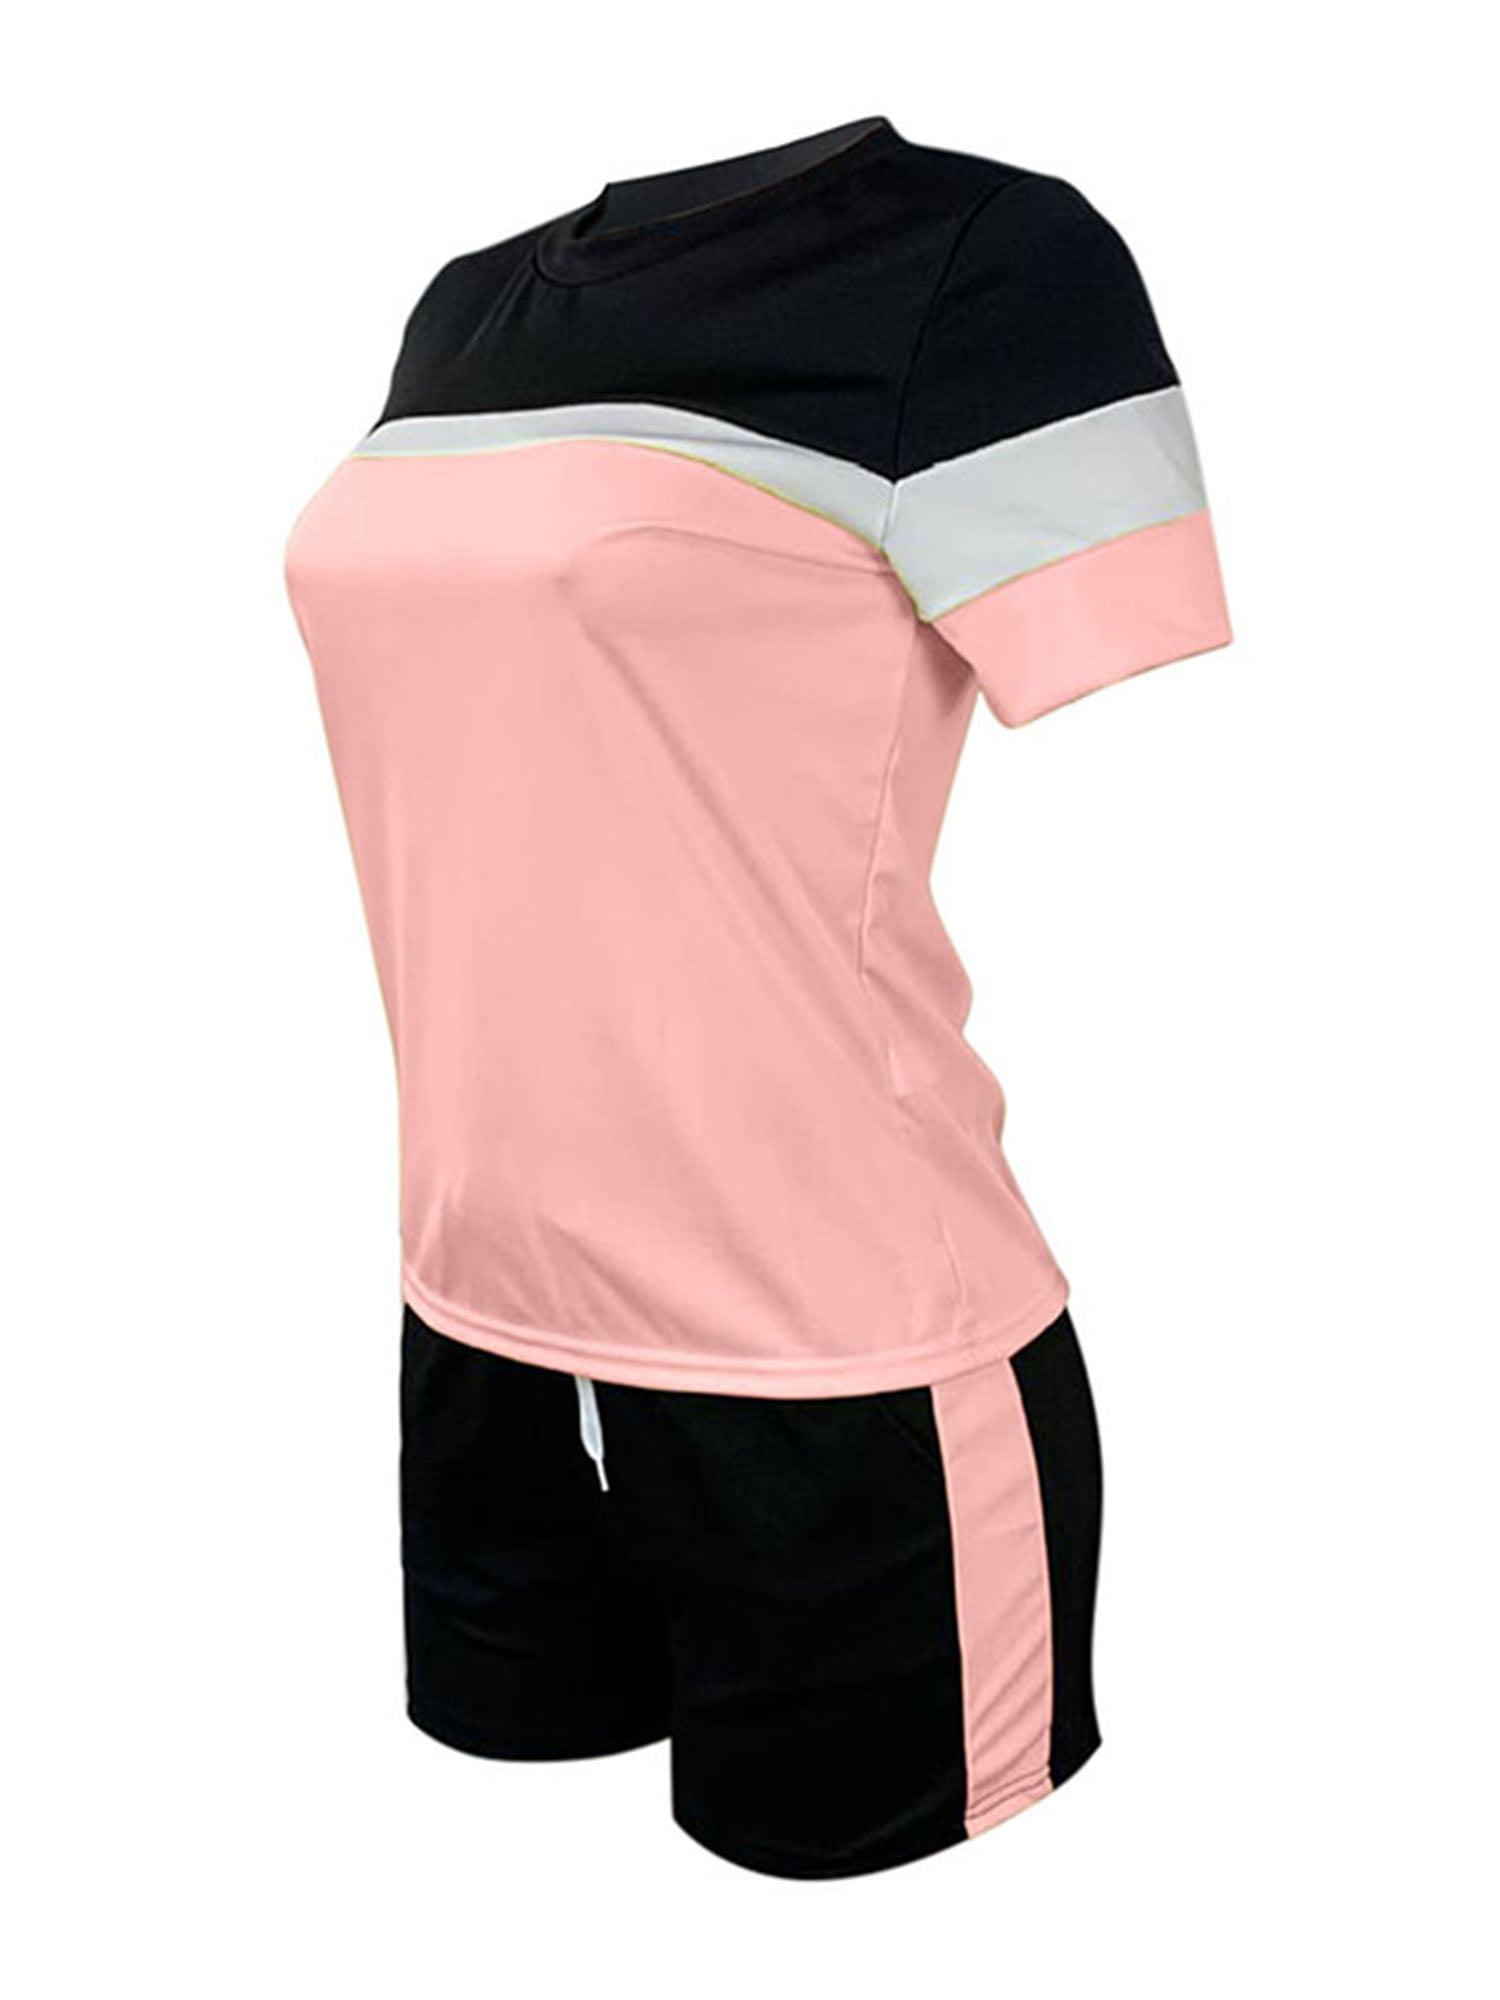 Pink Printing Women'S Outfits Short Sleeve T-Shirts And Long Pants 2 Piece  Set Fitness XL XXL XXXL Women'S Summer Tracksuit